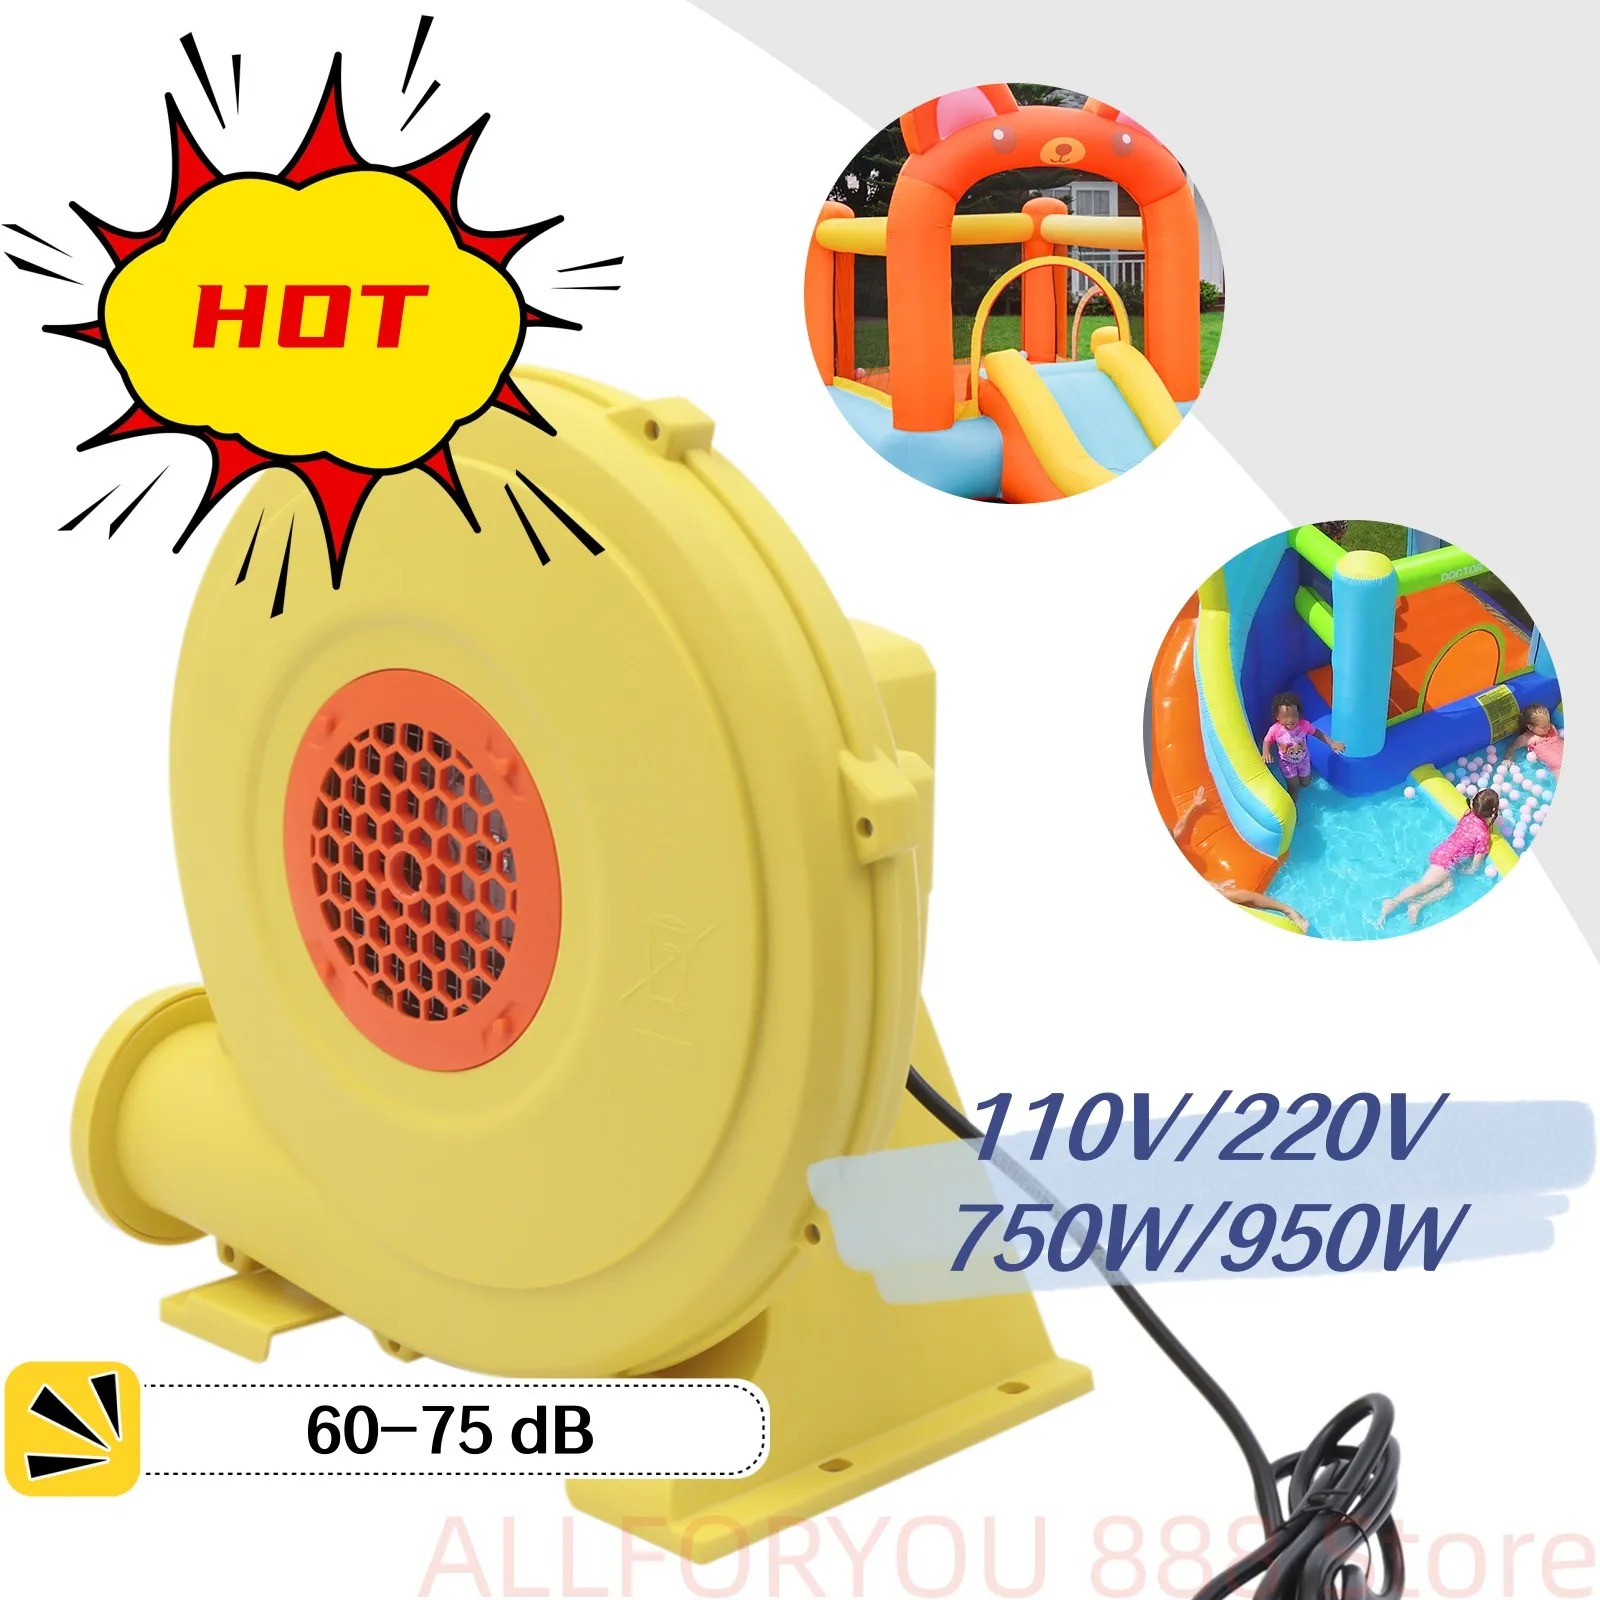 750W/950W Air Blower Commercial Inflatable Fan Bounce Fan For Bouncy Castle 110V/220V